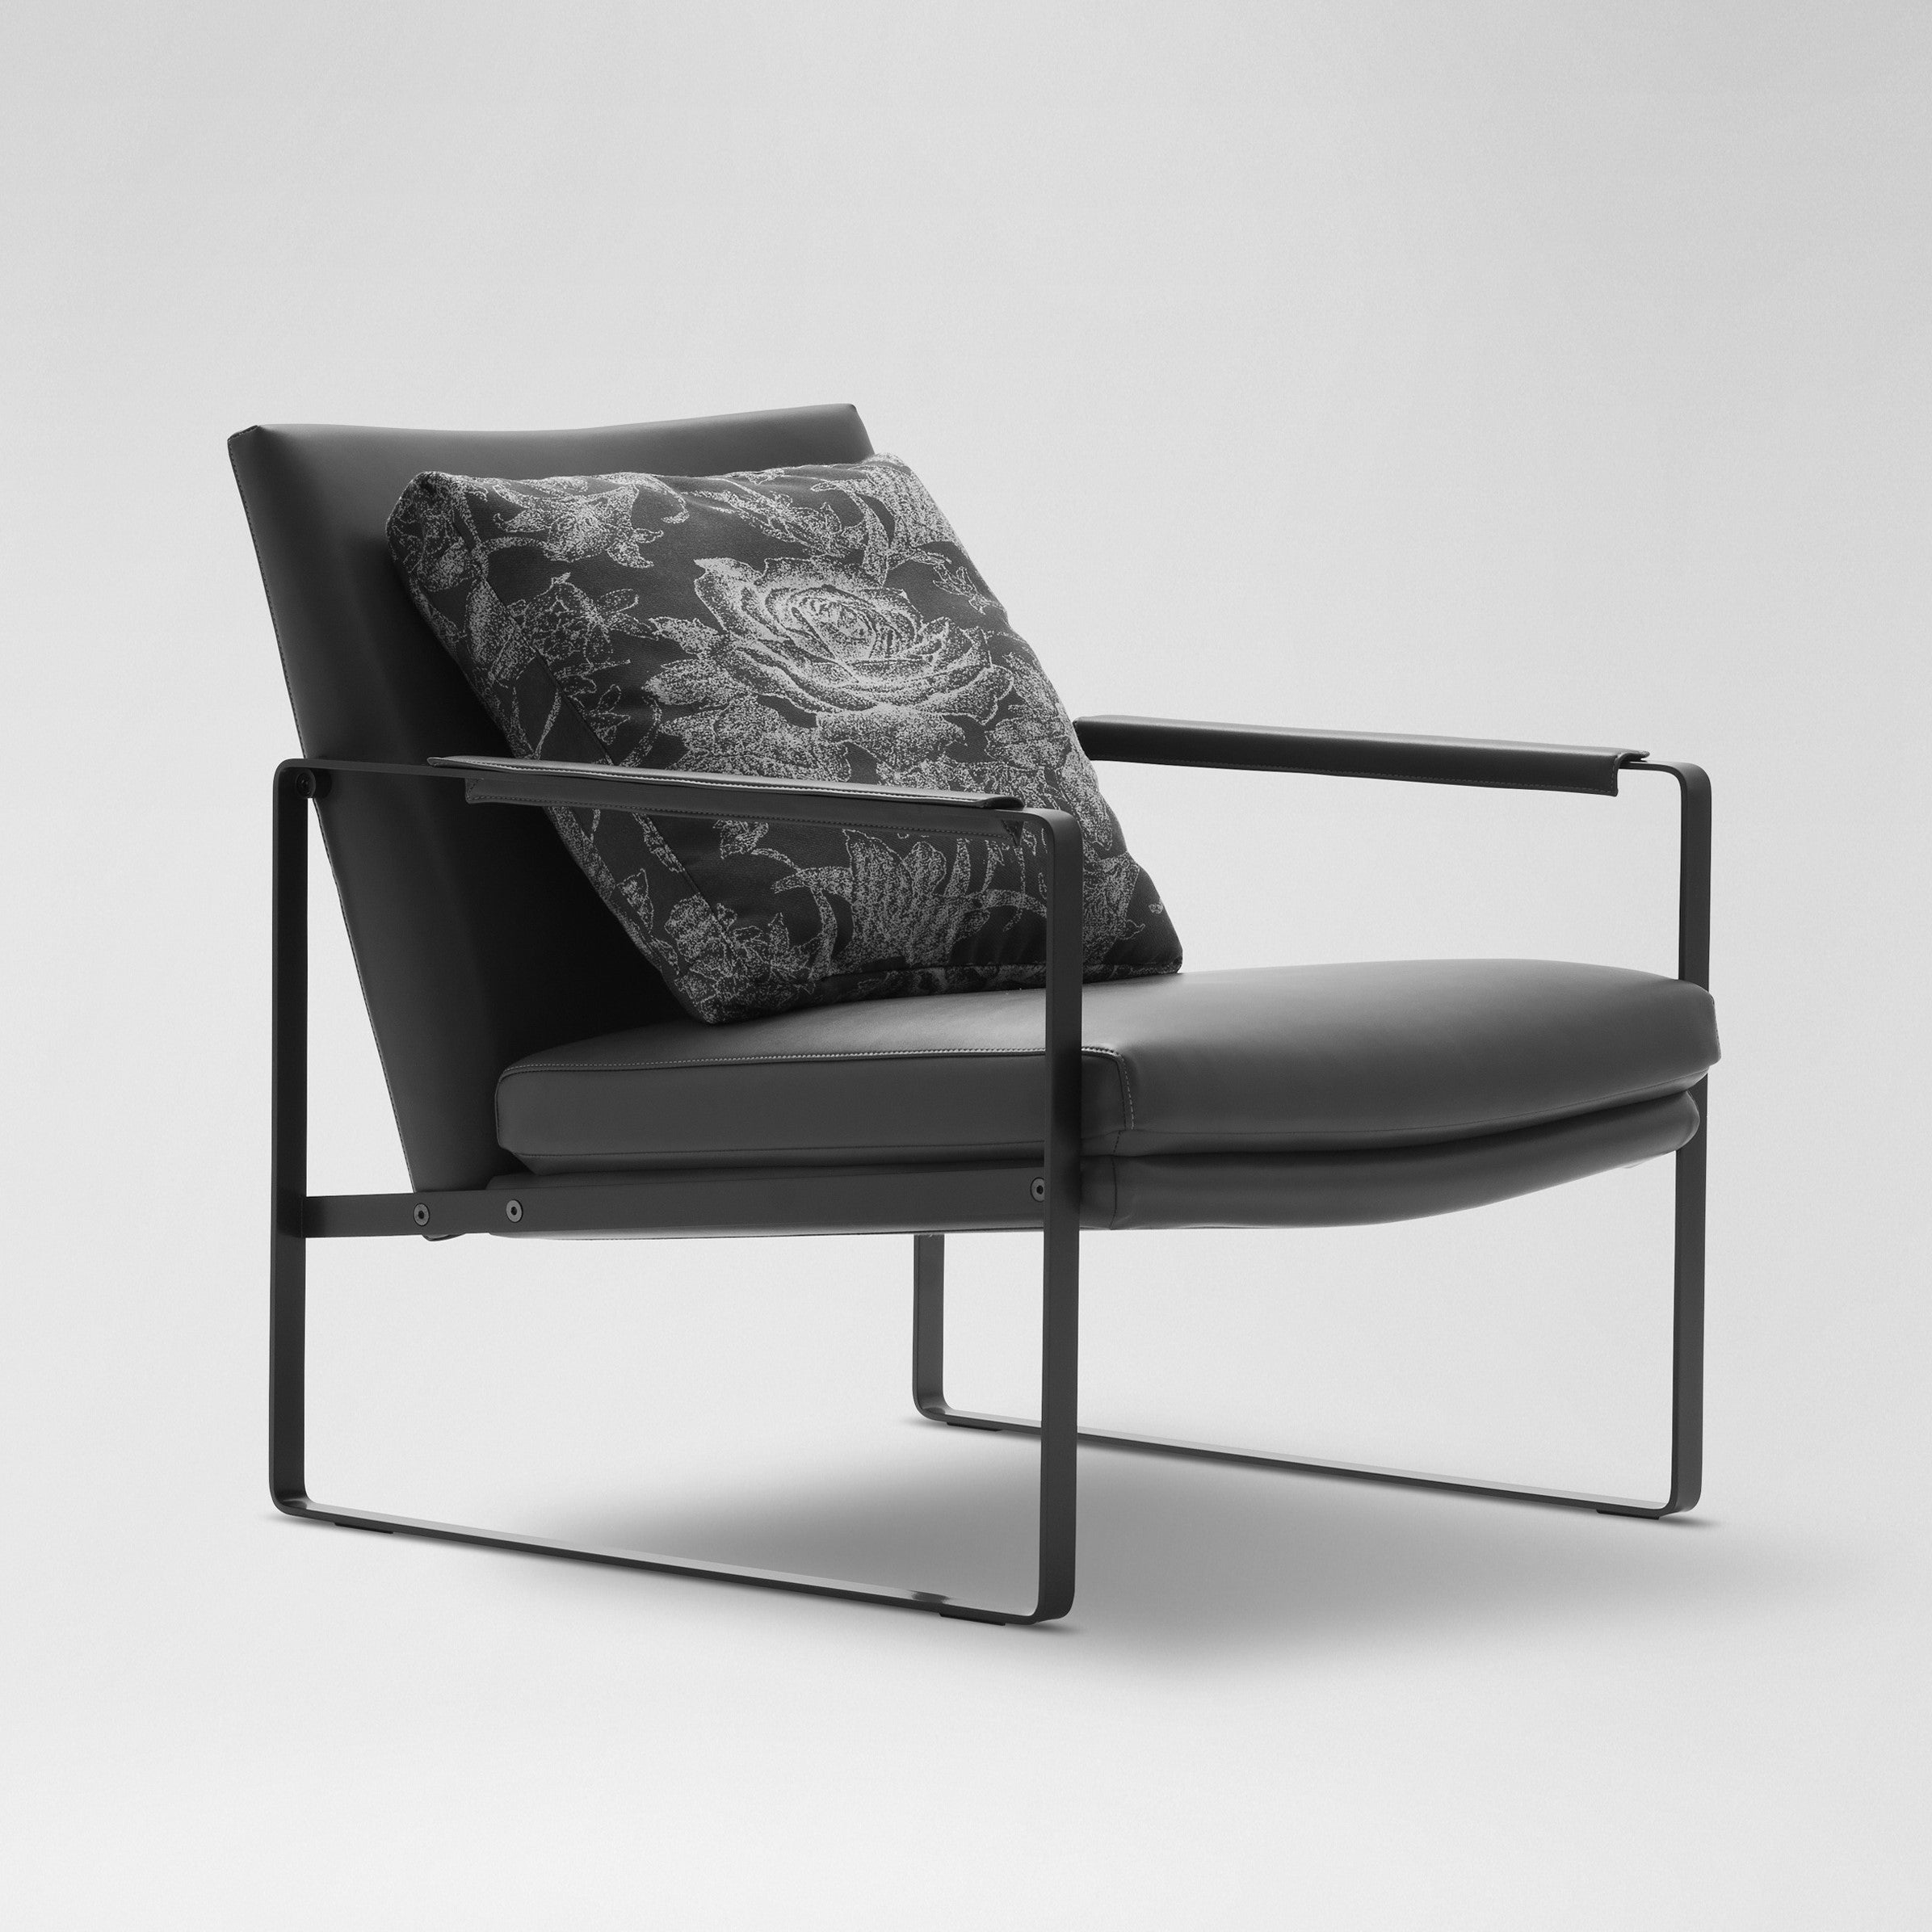 Leman Lounge Chair